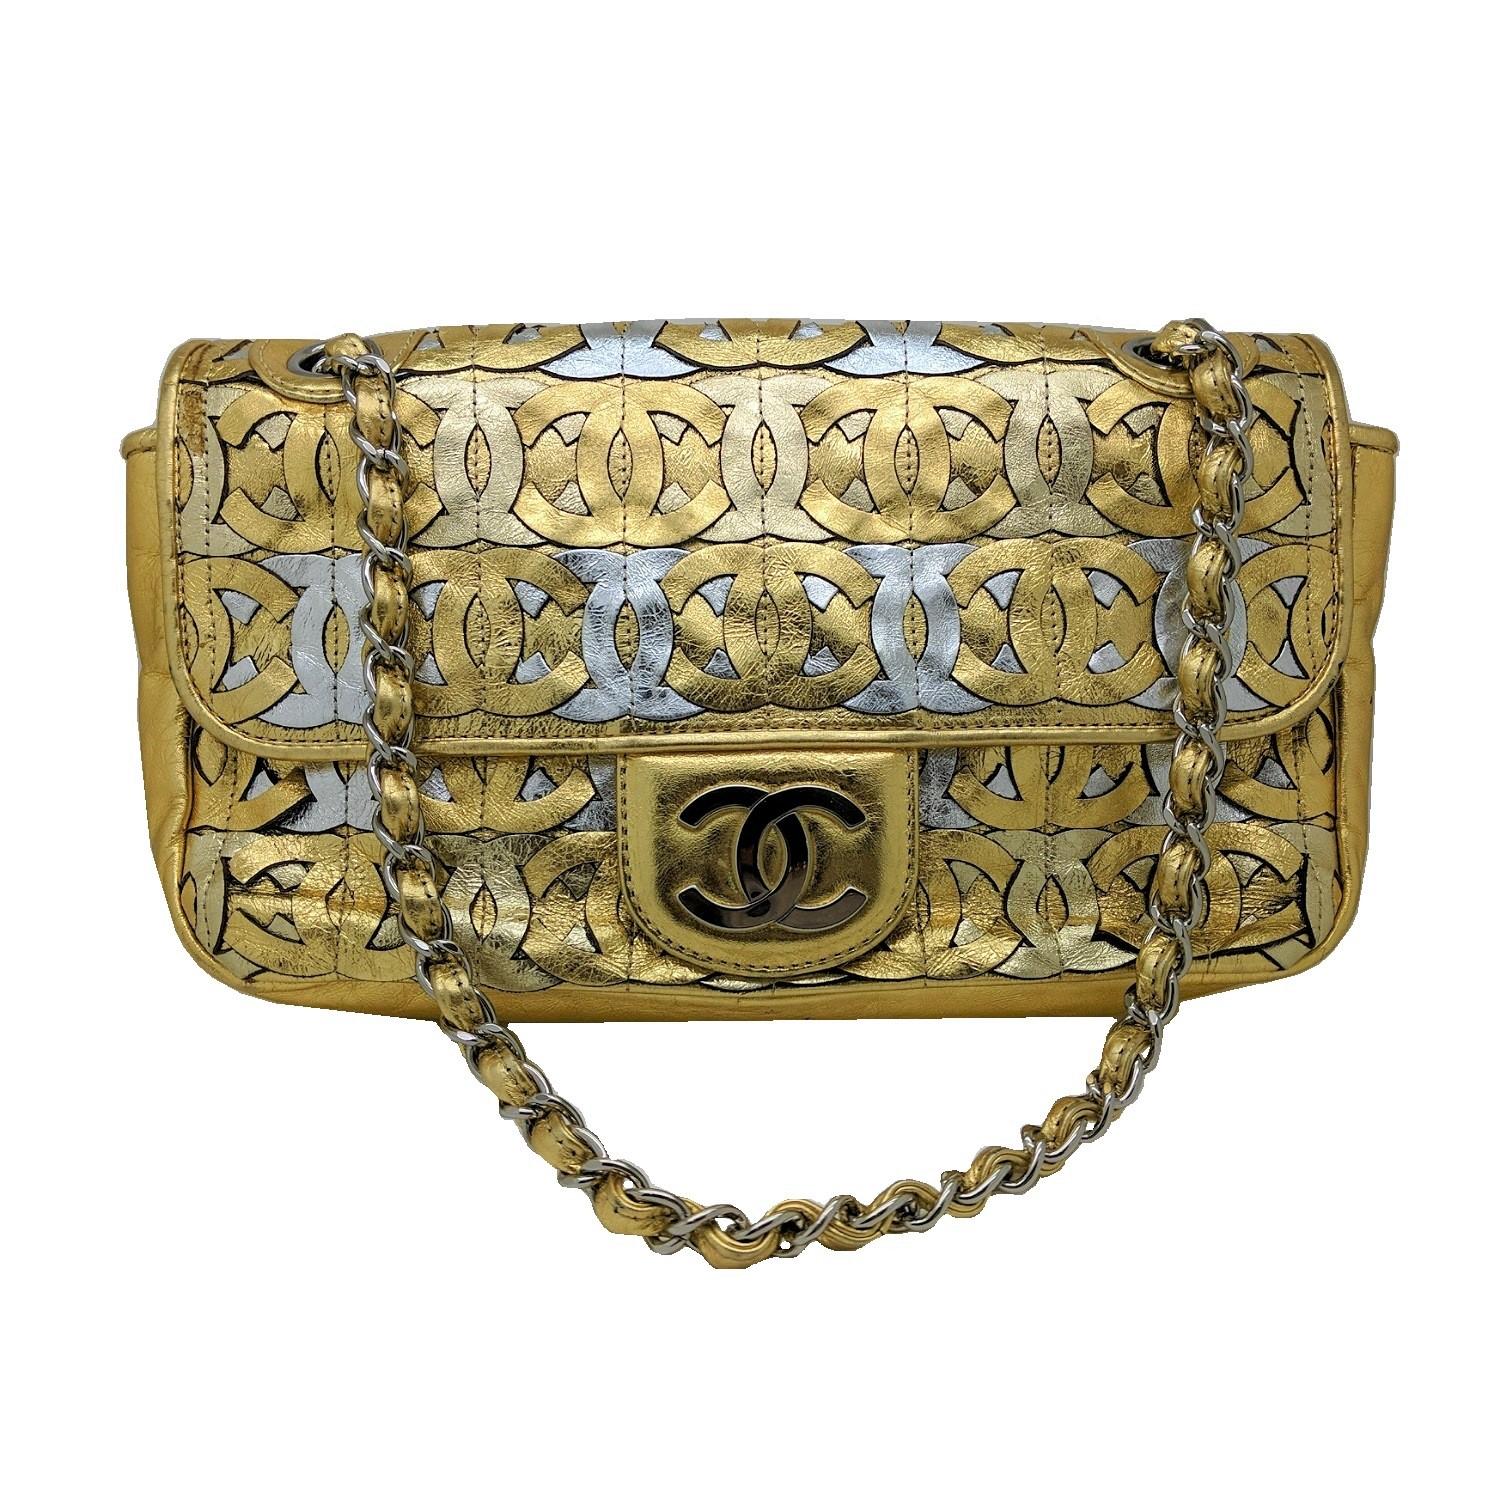 Chanel 2008 Metallic Gold & Silver CC Flap Bag